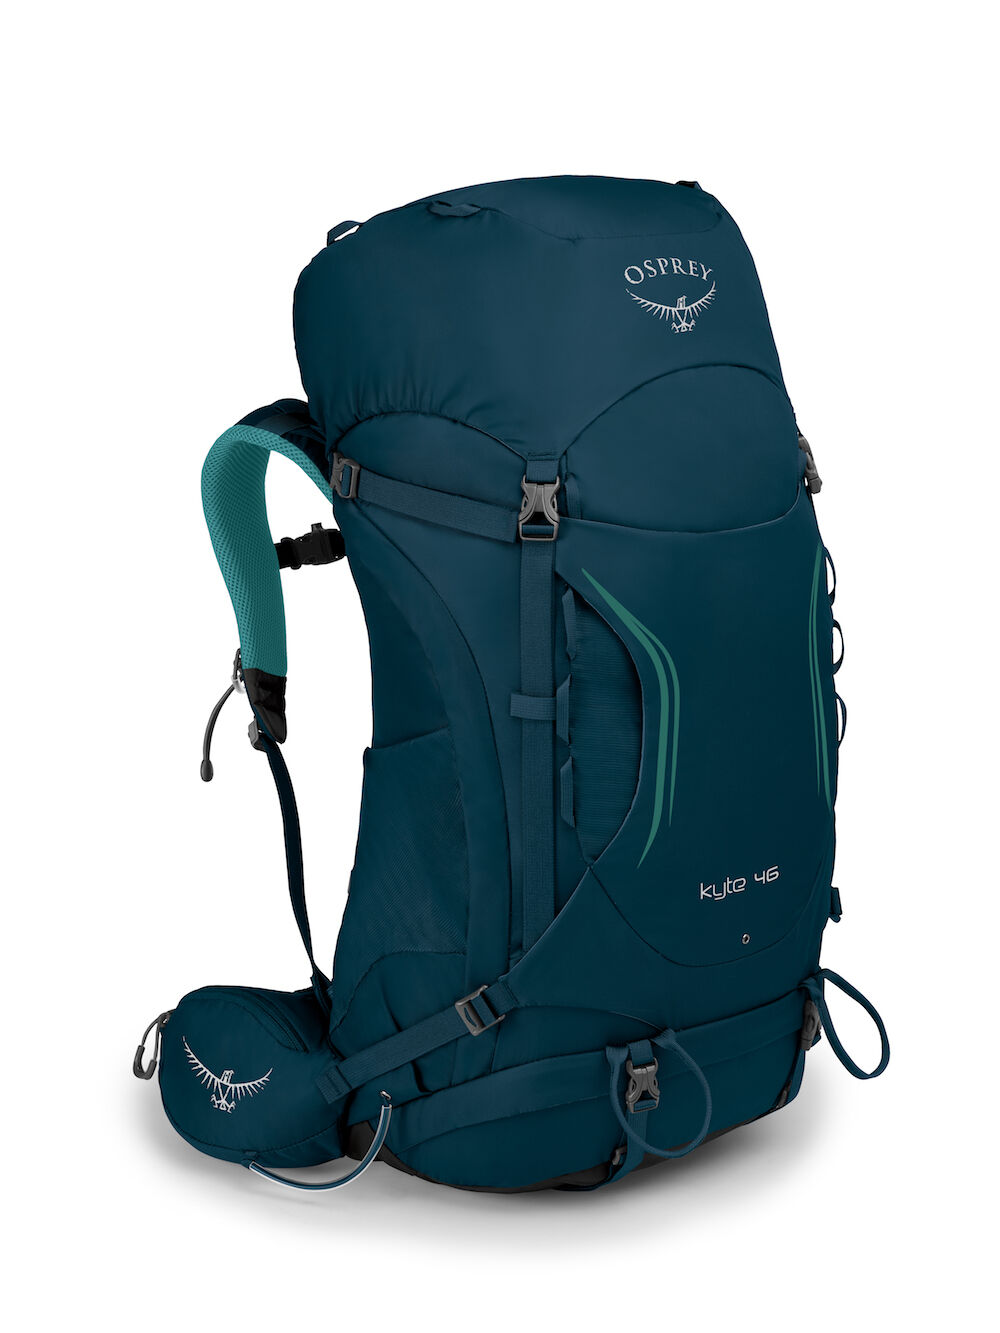 Osprey Kyte 46 - Hiking backpack - Women's